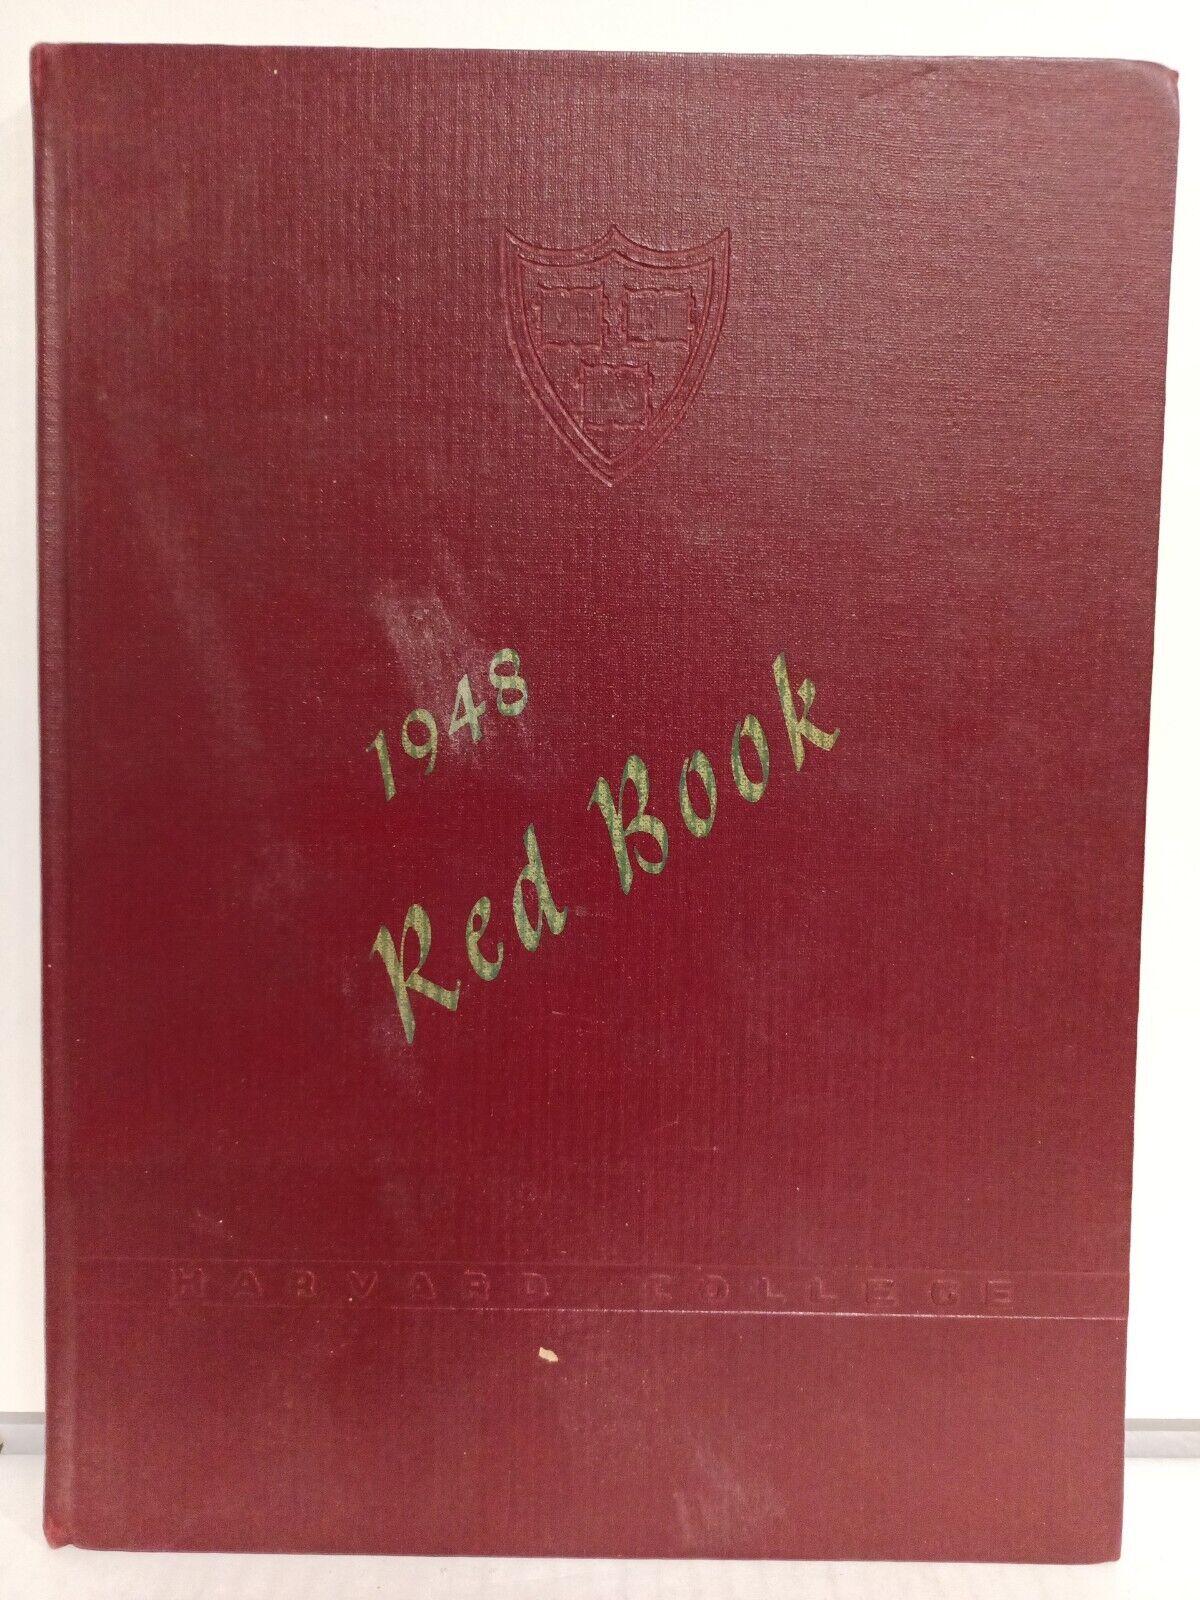 1948 HARVARD FRESHMAN RED BOOK YEARBOOK, CAMBRIDGE, MASSACHUSETTS VE RI TAS